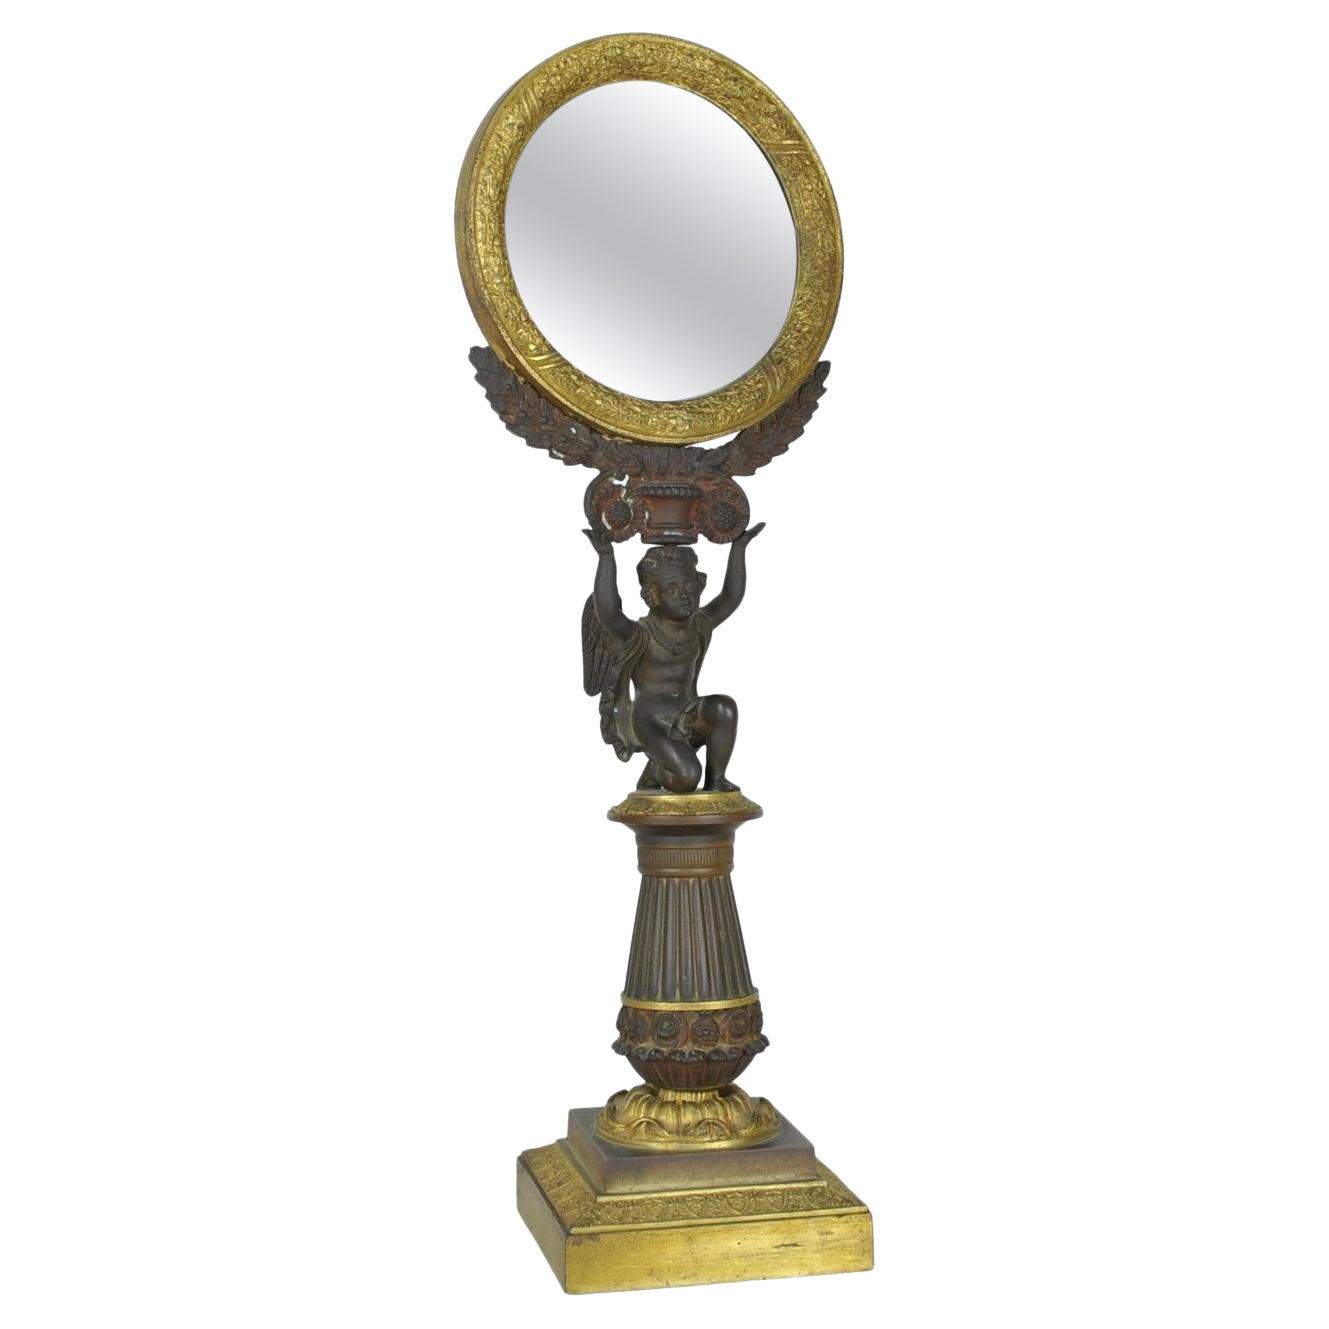 Miroir de table en bronze, période de restauration, XIXe siècle